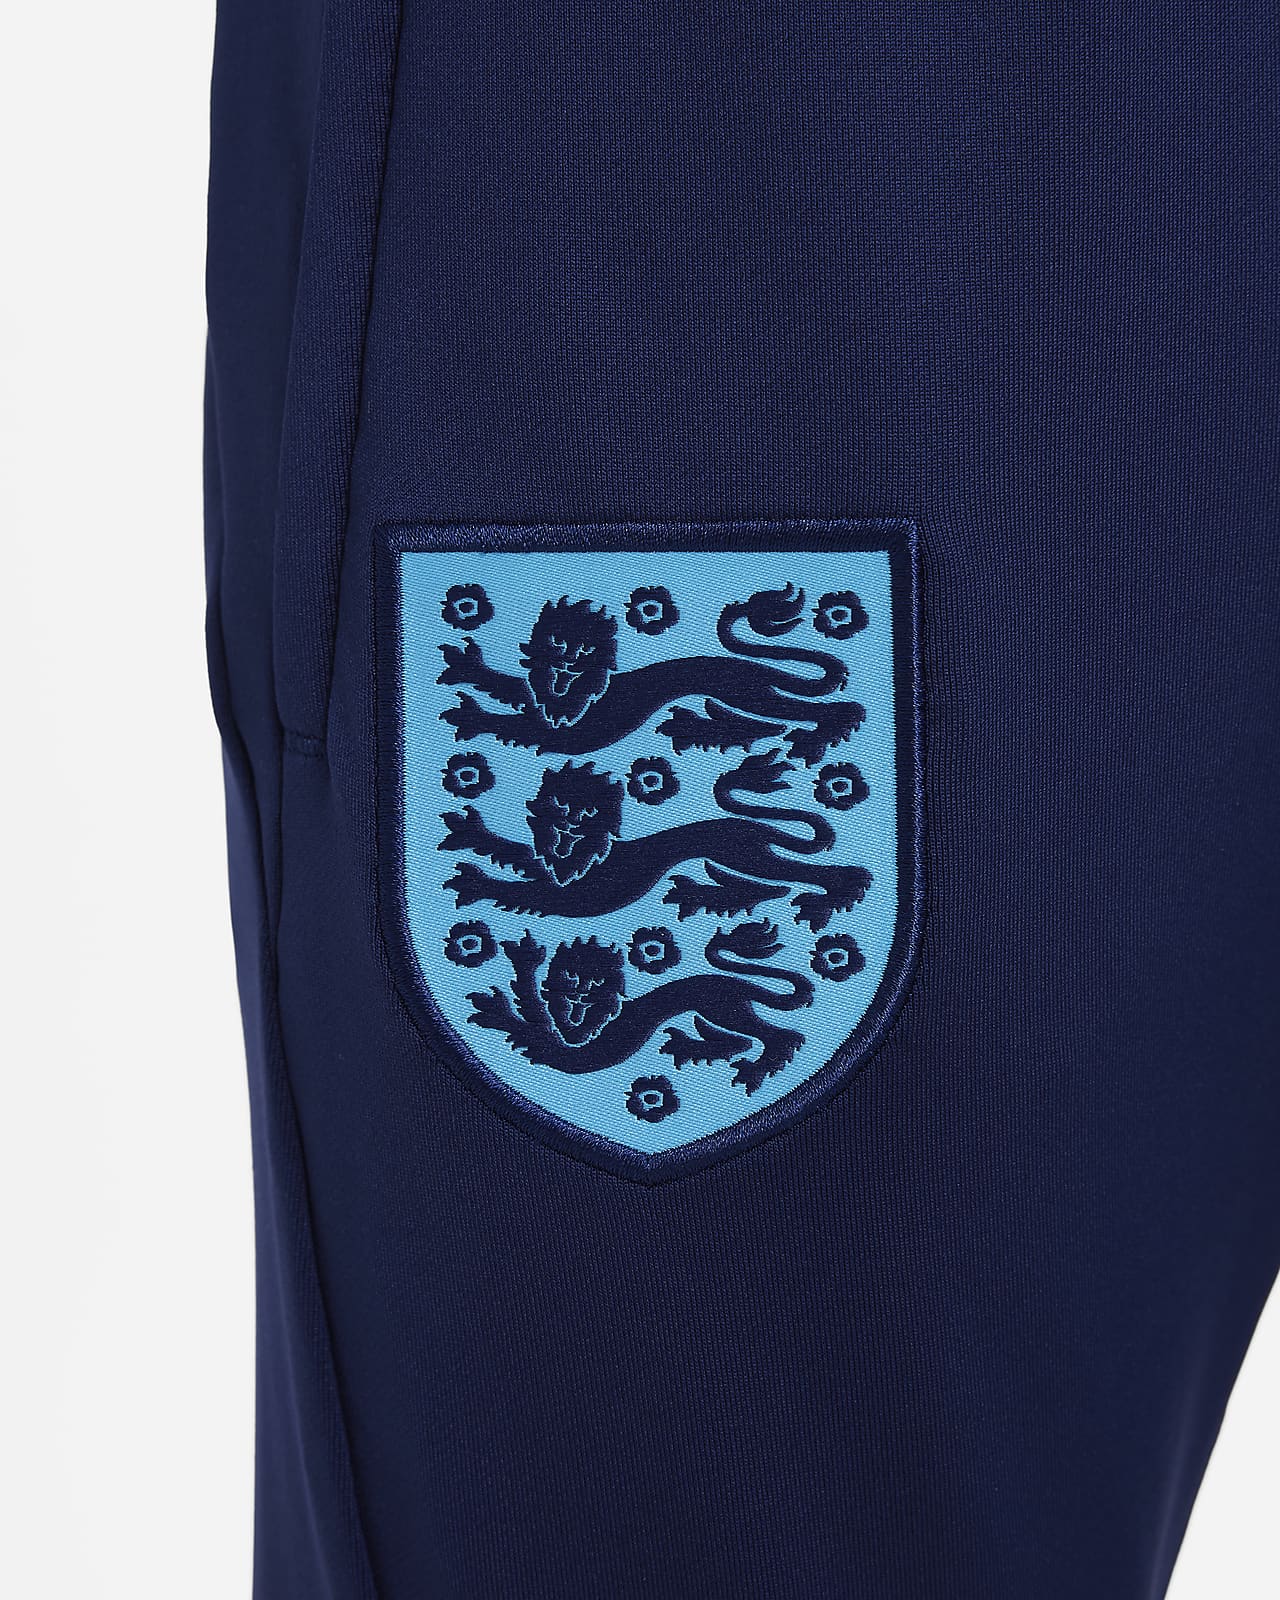 England Strike Big Kids' Nike Dri-FIT Knit Soccer Pants.